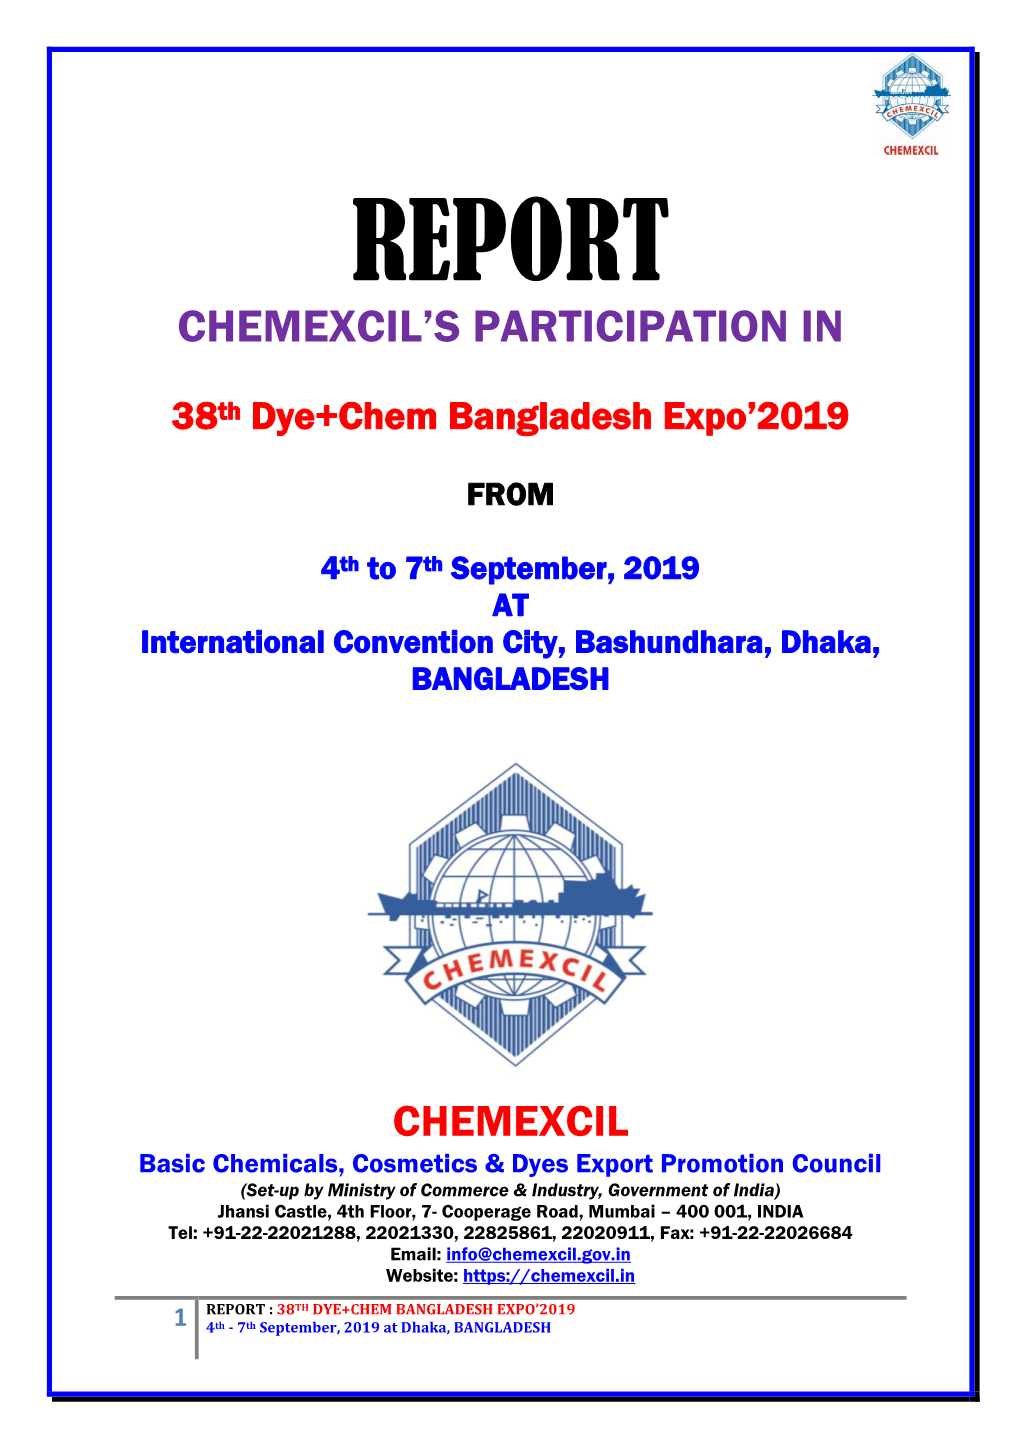 38Th Dye+Chem Bangladesh 2019 Show Organized at ICCB